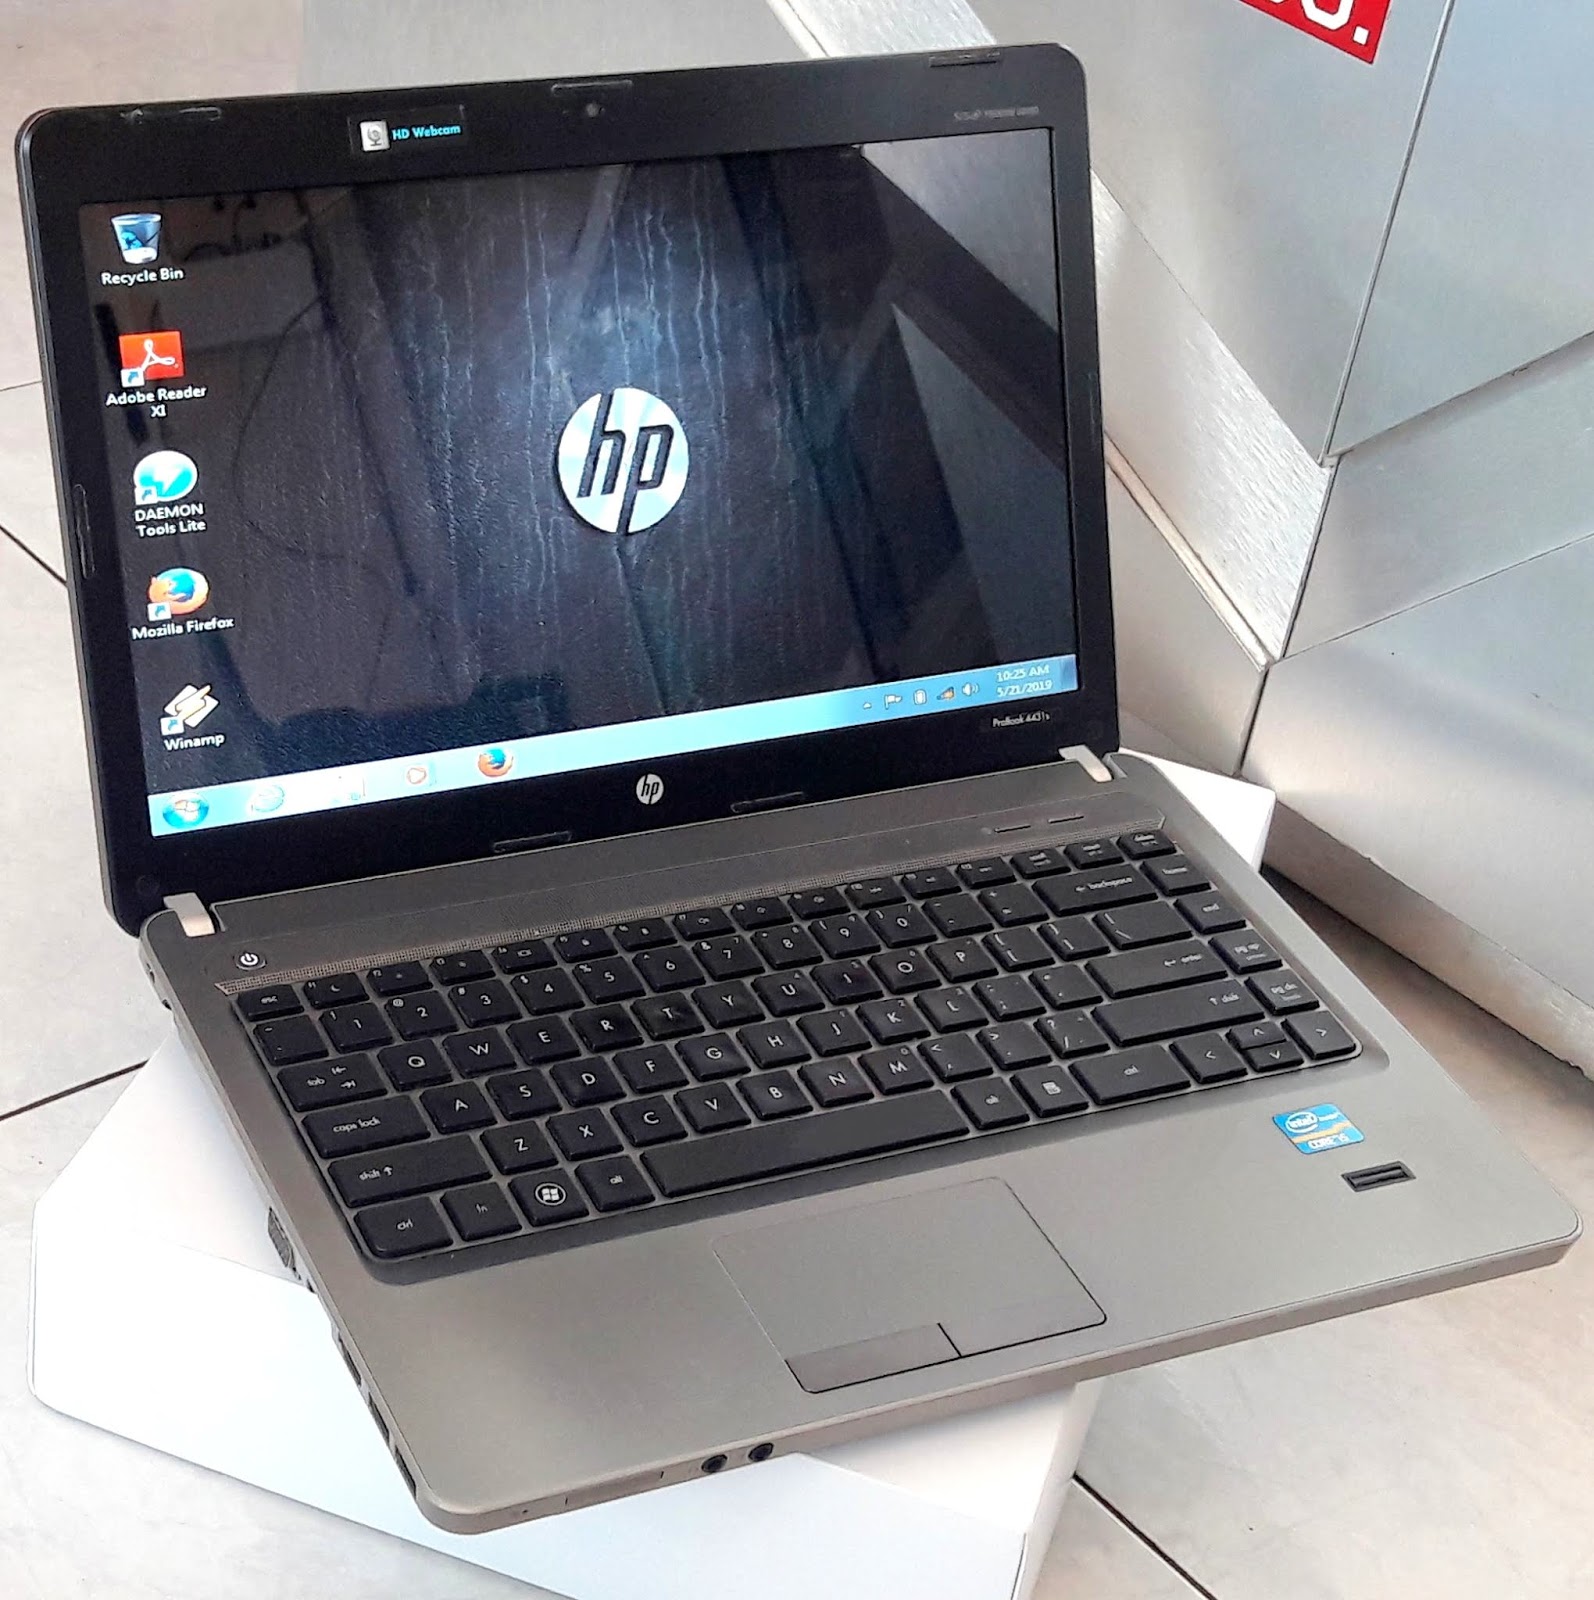 Tempat Jual Laptop Seken Murah di Semarang